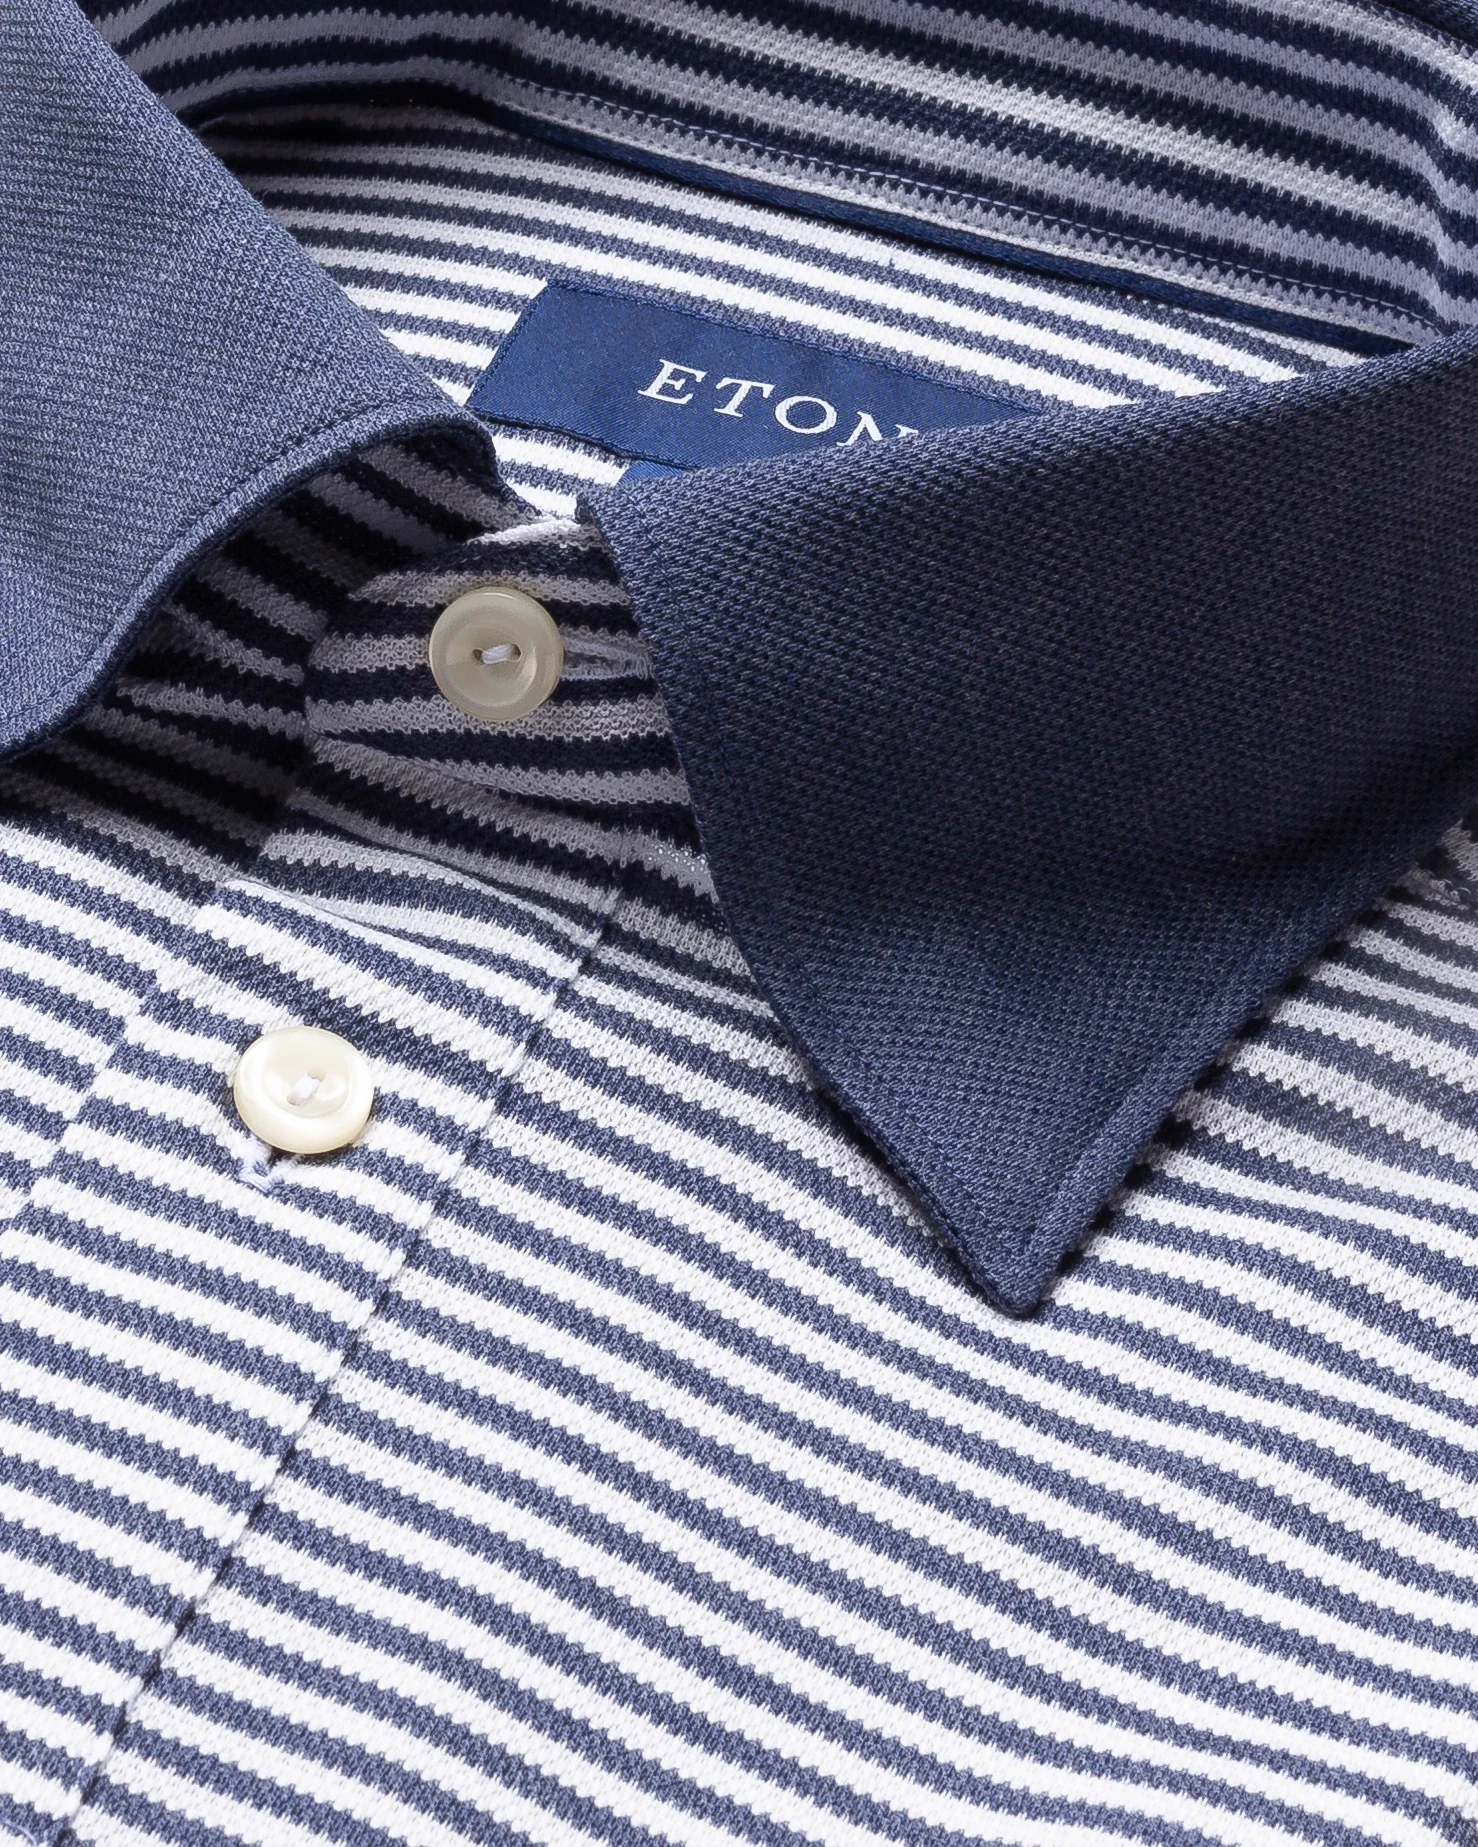 Eton - navy striped polo shirt long sleeved